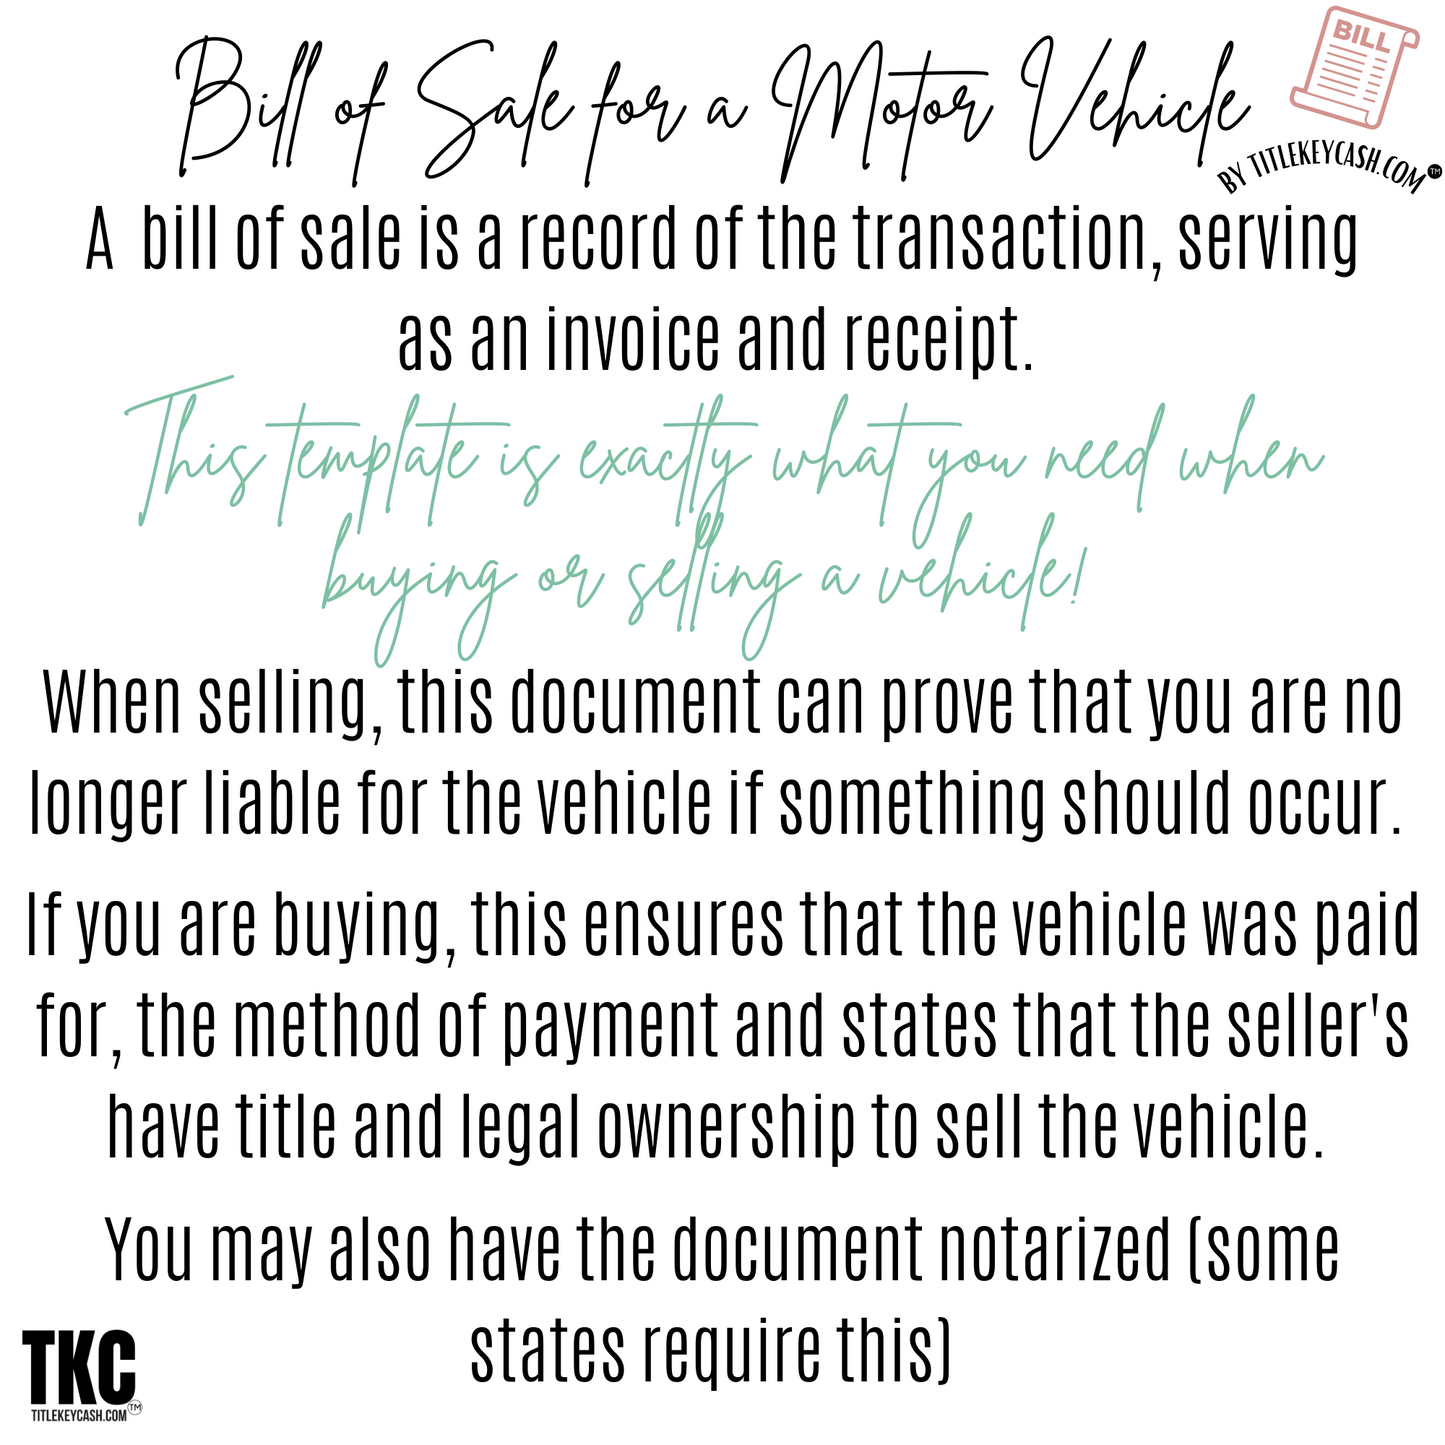 Motor Vehicle Bill of Sale